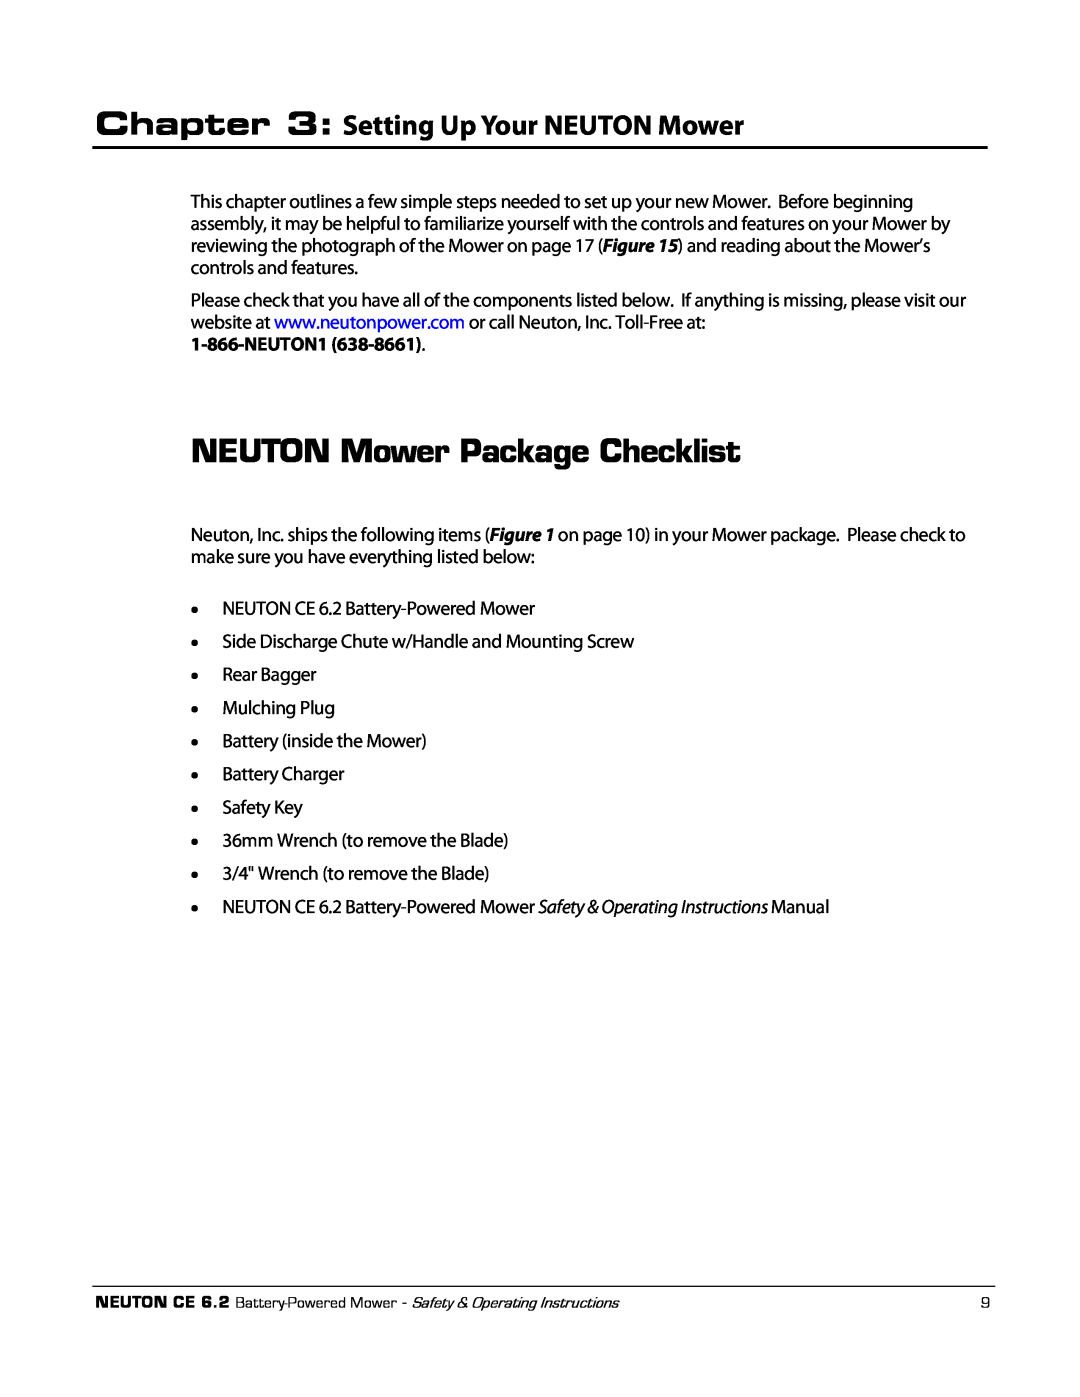 Neuton CE 6.2 manual NEUTON Mower Package Checklist, Setting Up Your NEUTON Mower 